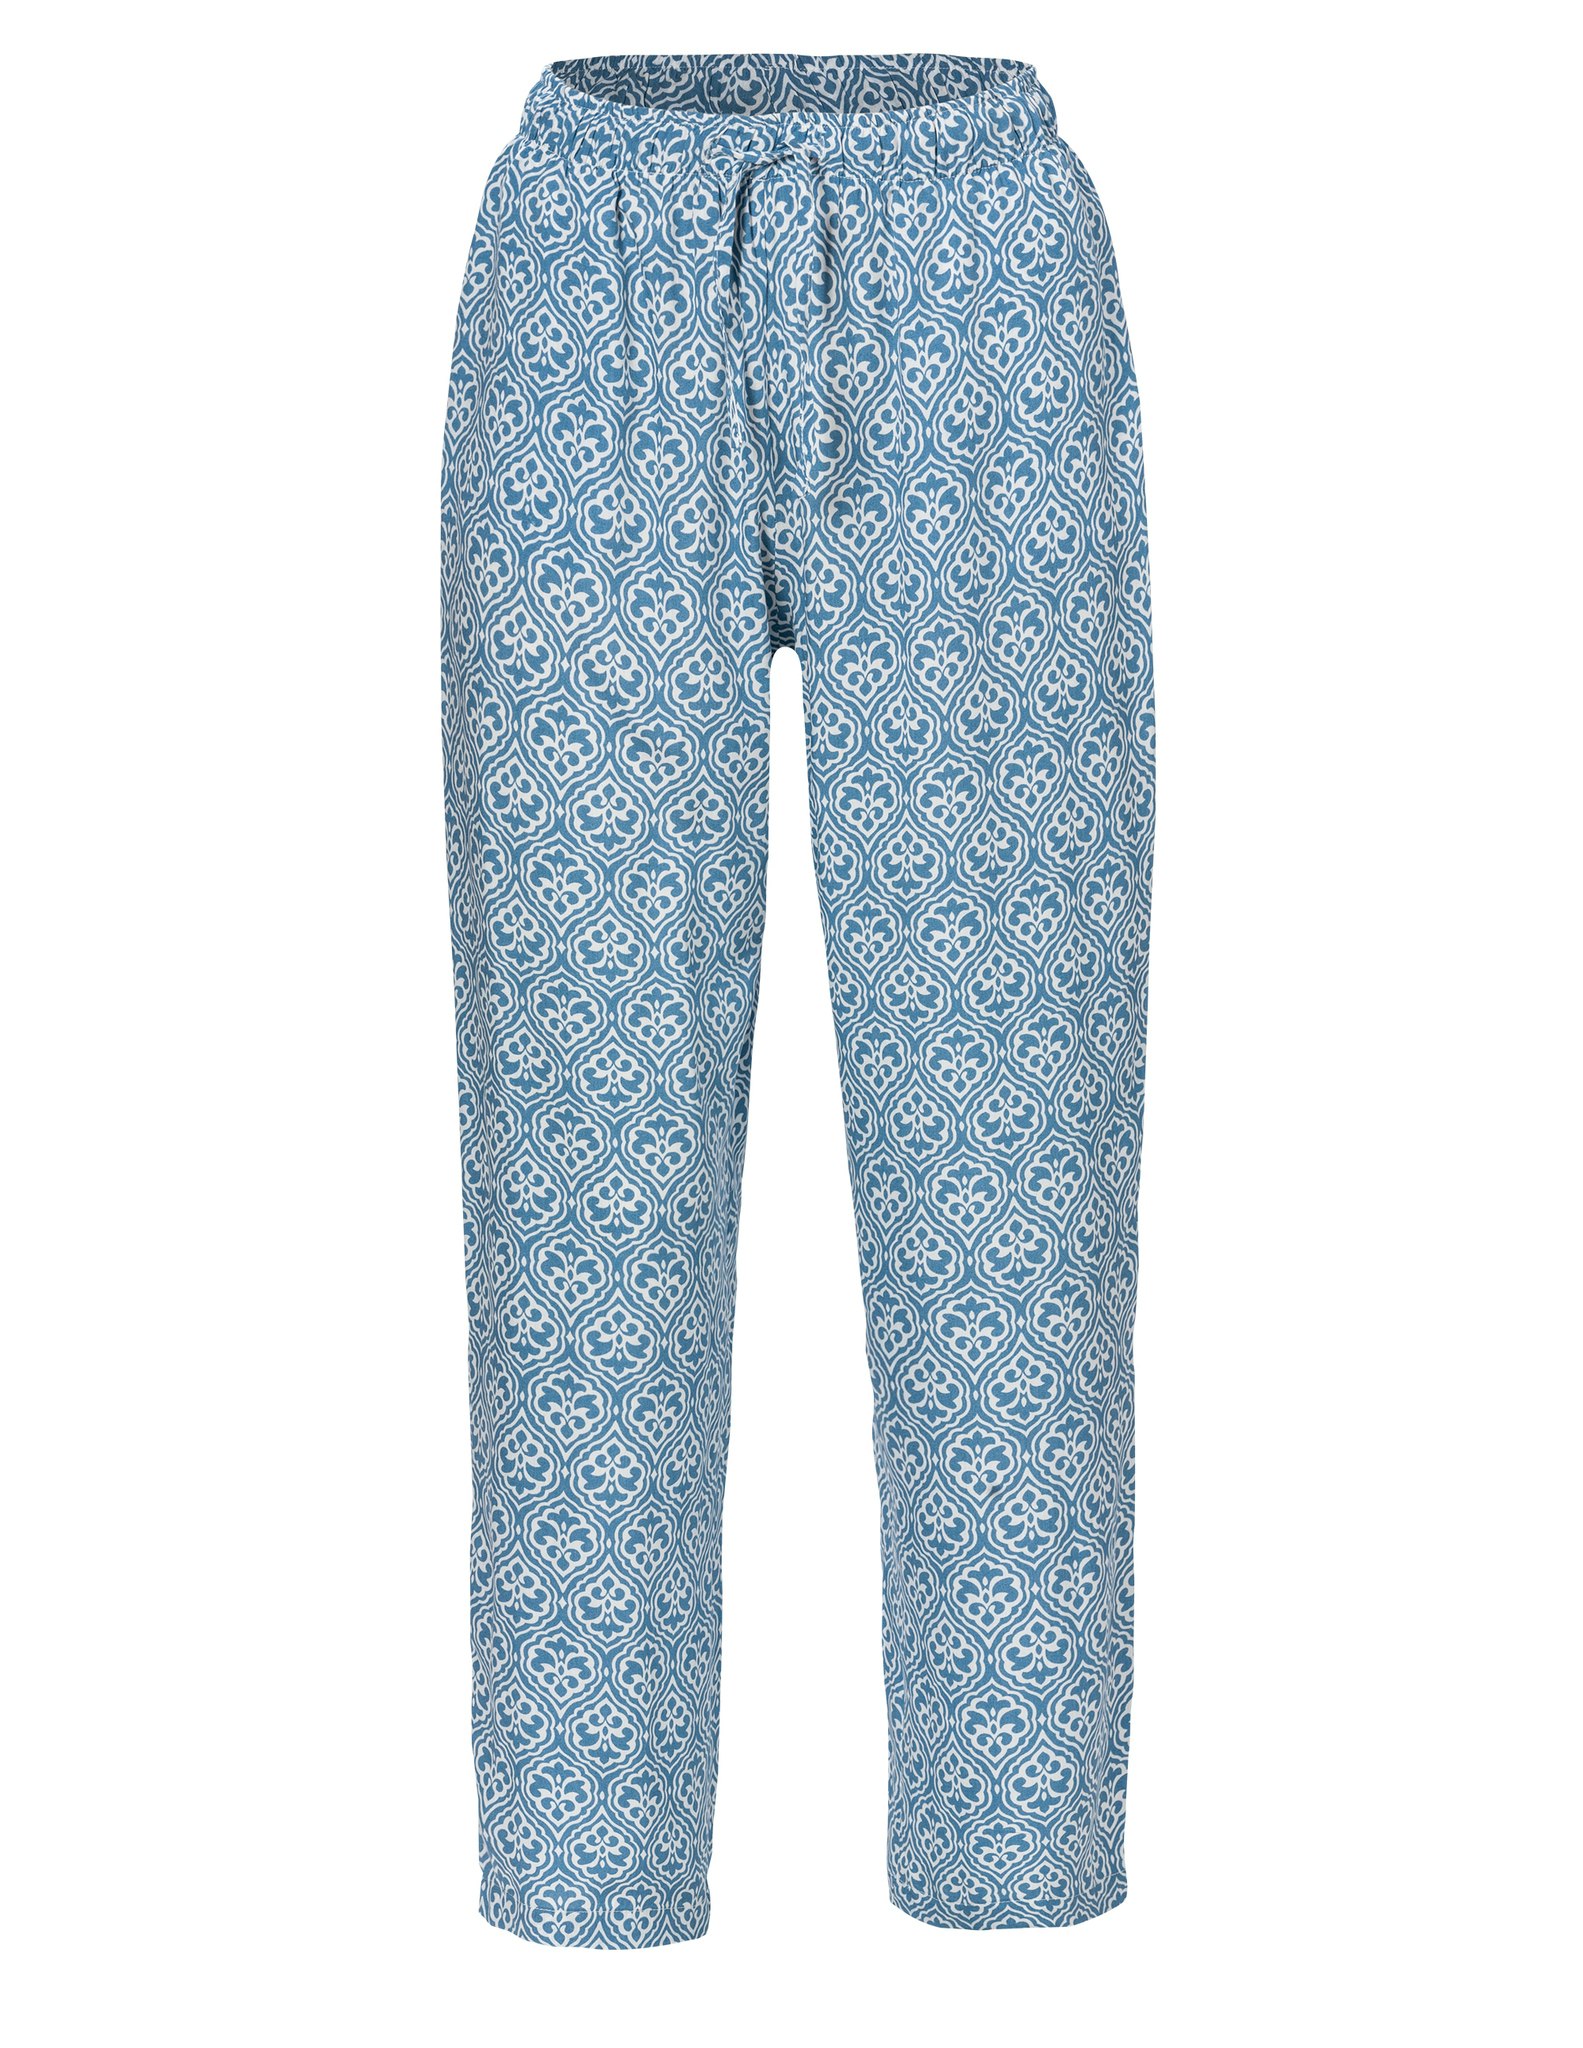 Trofé pyjamas 64124 blåmönstrad 7300